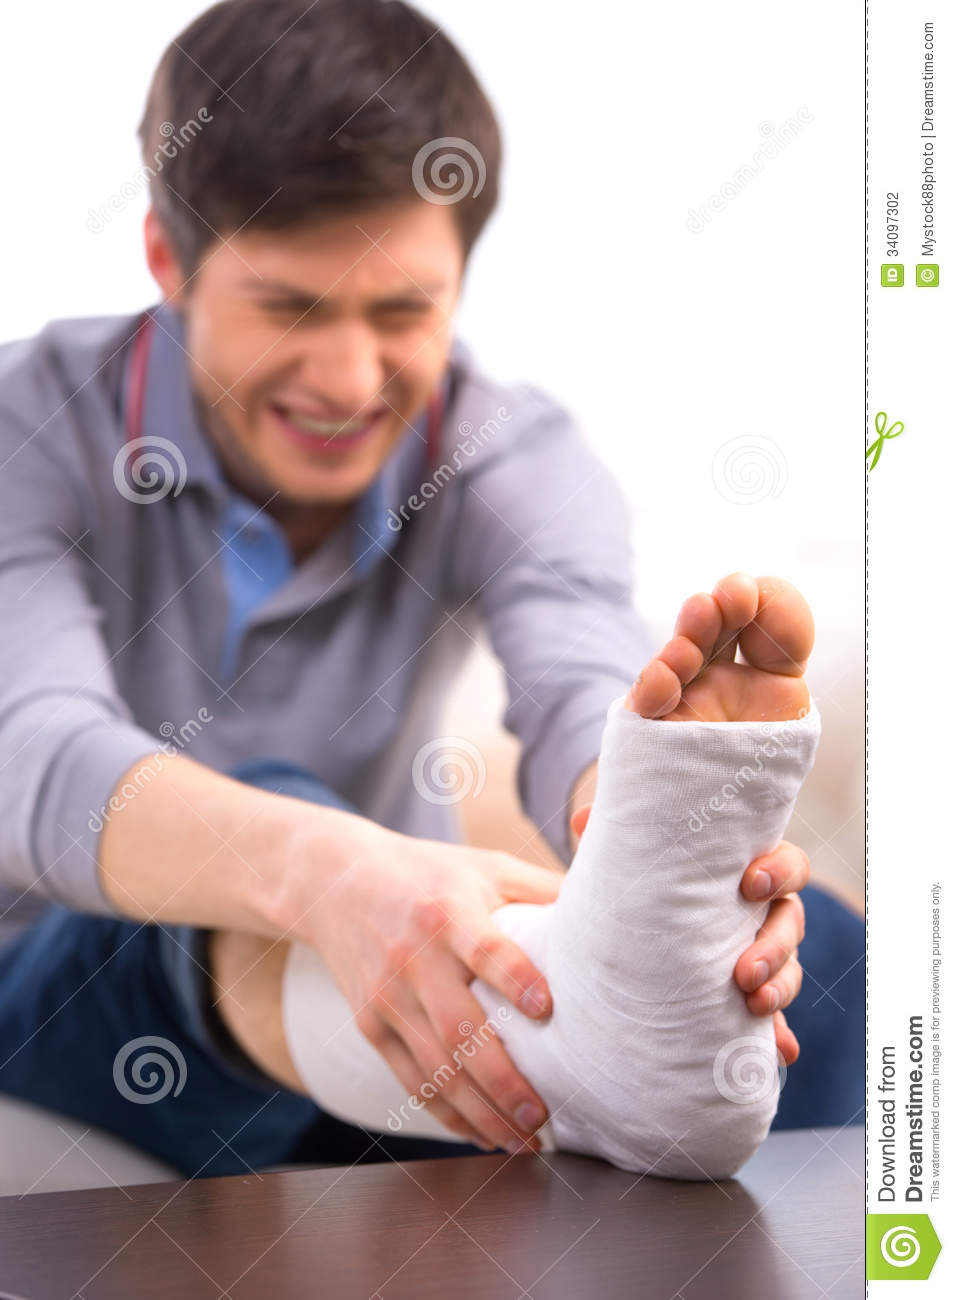 Man Is Suffering In Pain While Touching Broken Leg